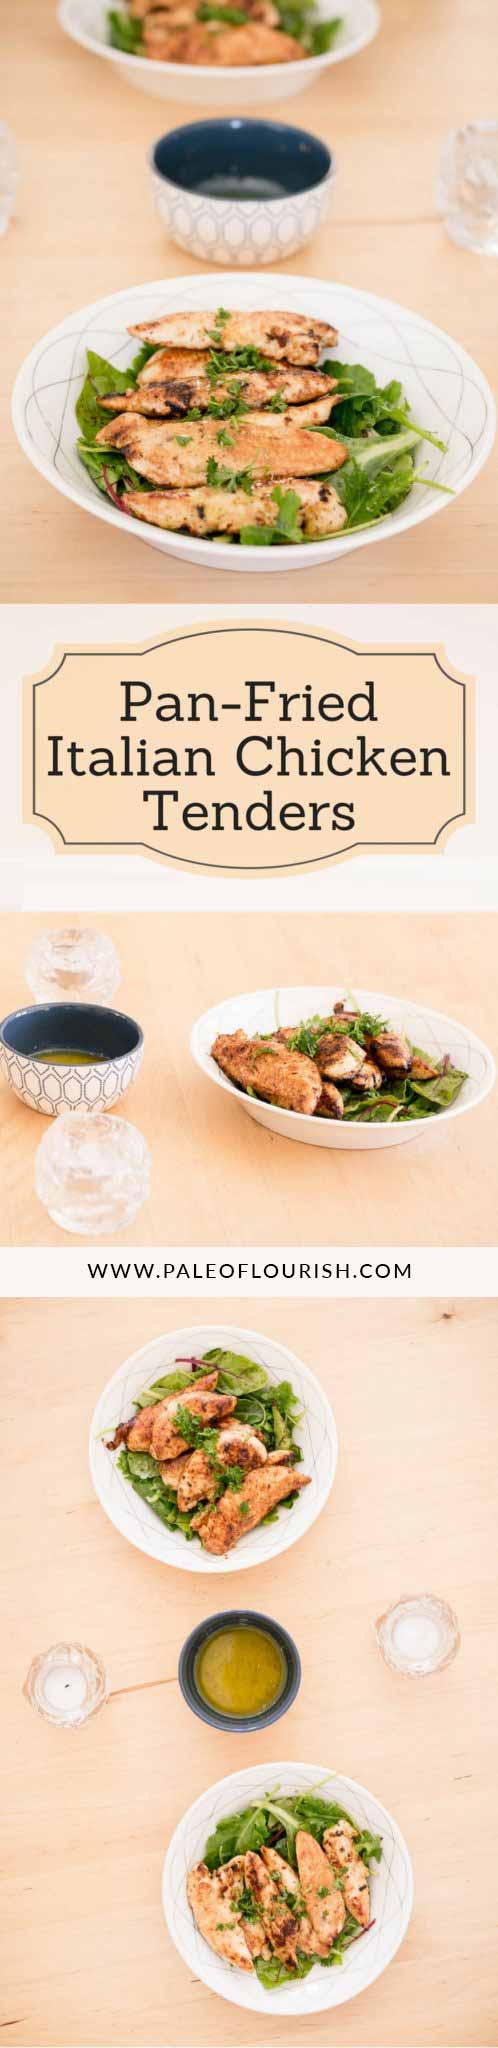 Pan-Fried Italian Chicken Tenders #paleo #recipes #glutenfree https://paleoflourish.com/pan-fried-italian-chicken-tenders/